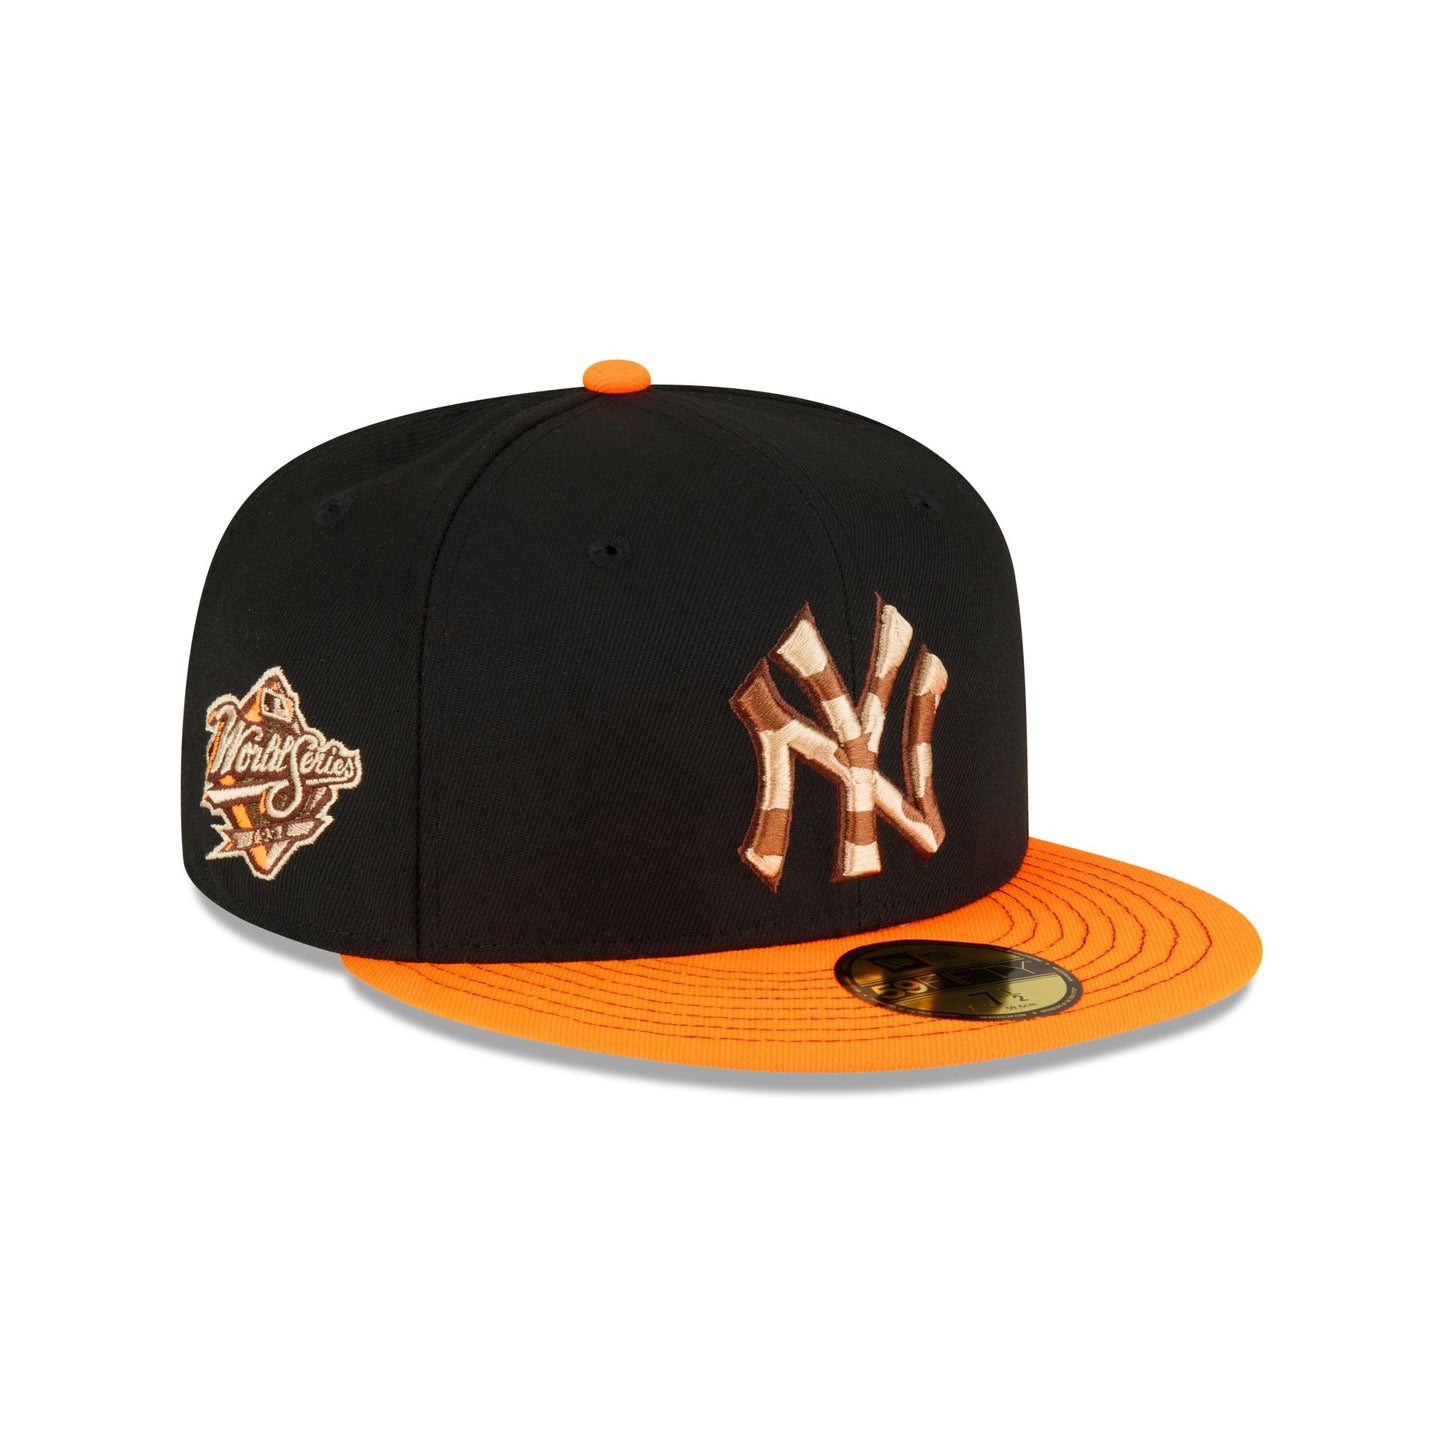 Just Caps Orange Visor New Fitted New – Cap Yankees Era 59FIFTY York Hat